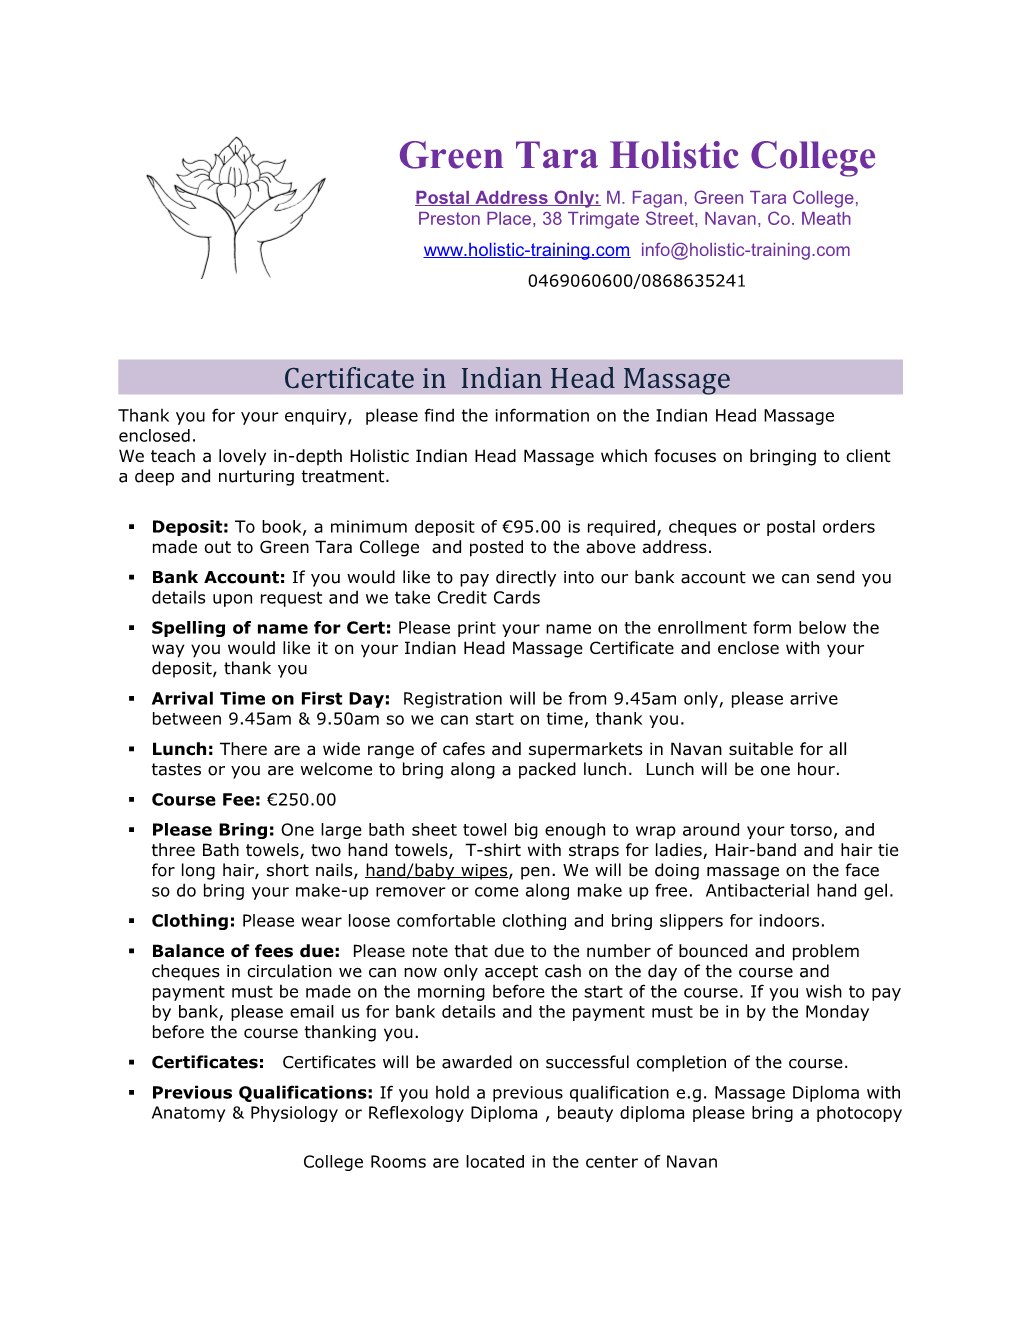 Certificate in Indian Head Massage